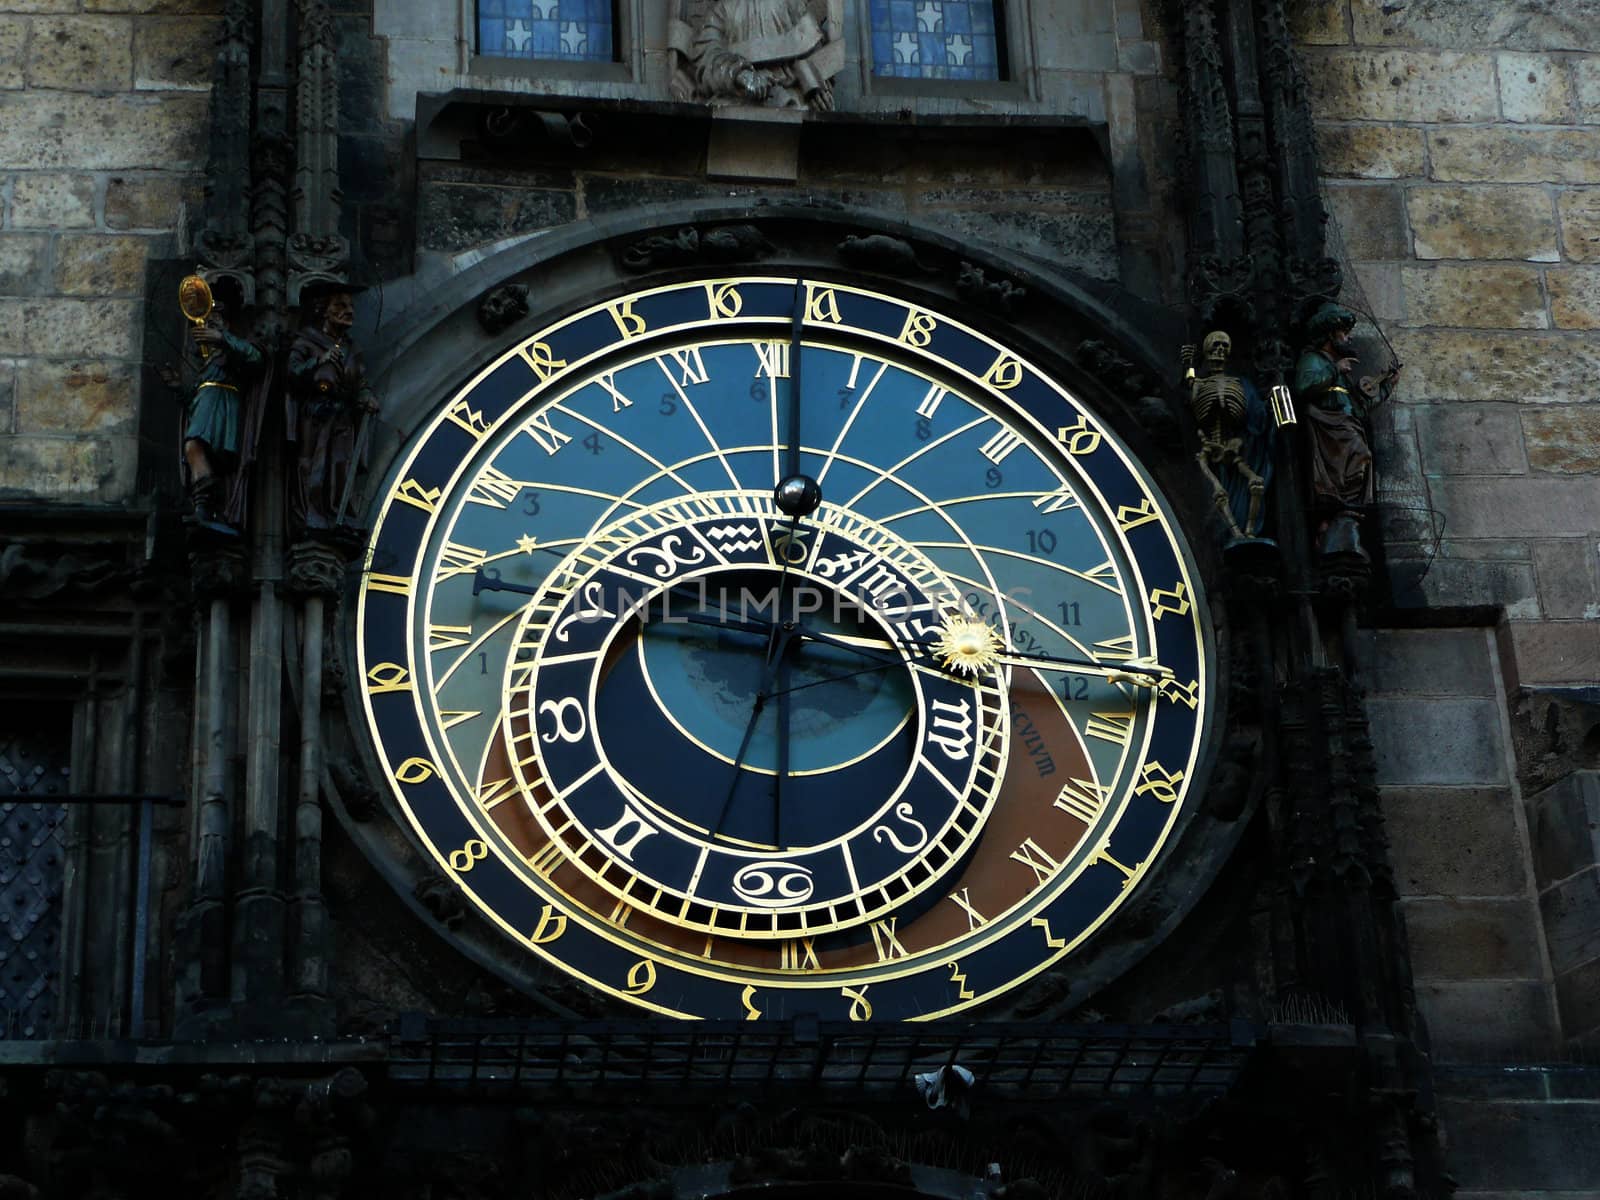 Prague Astronomical Clock, Czech Republic